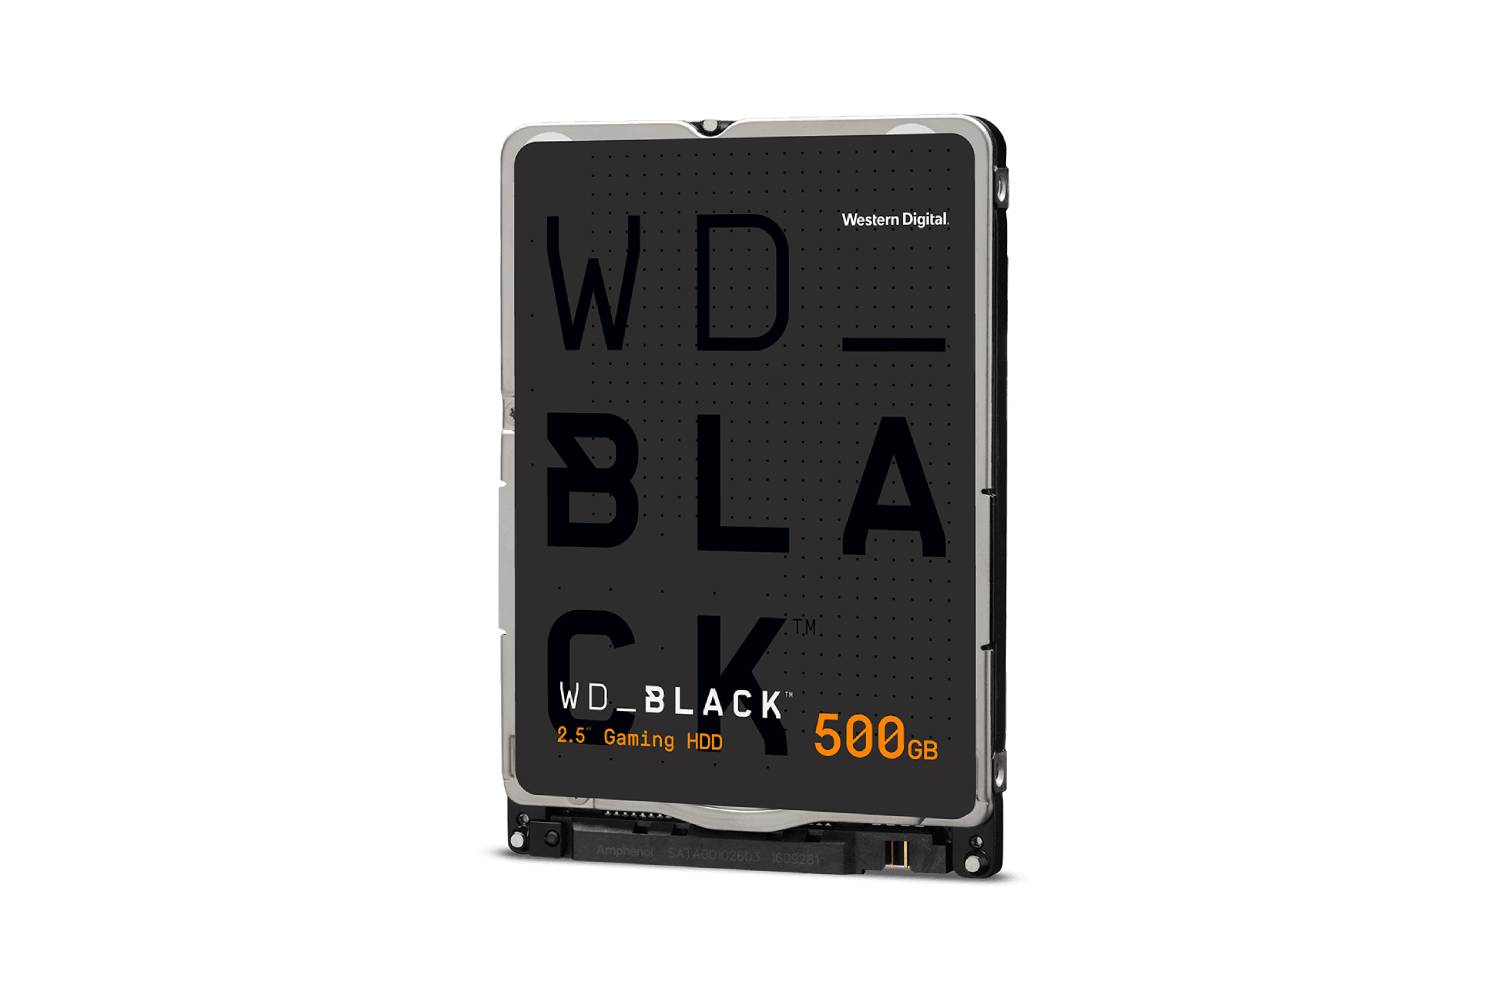 WD Black 500GB Performance Mobile Hard Disk Drive (WD5000LPLX)